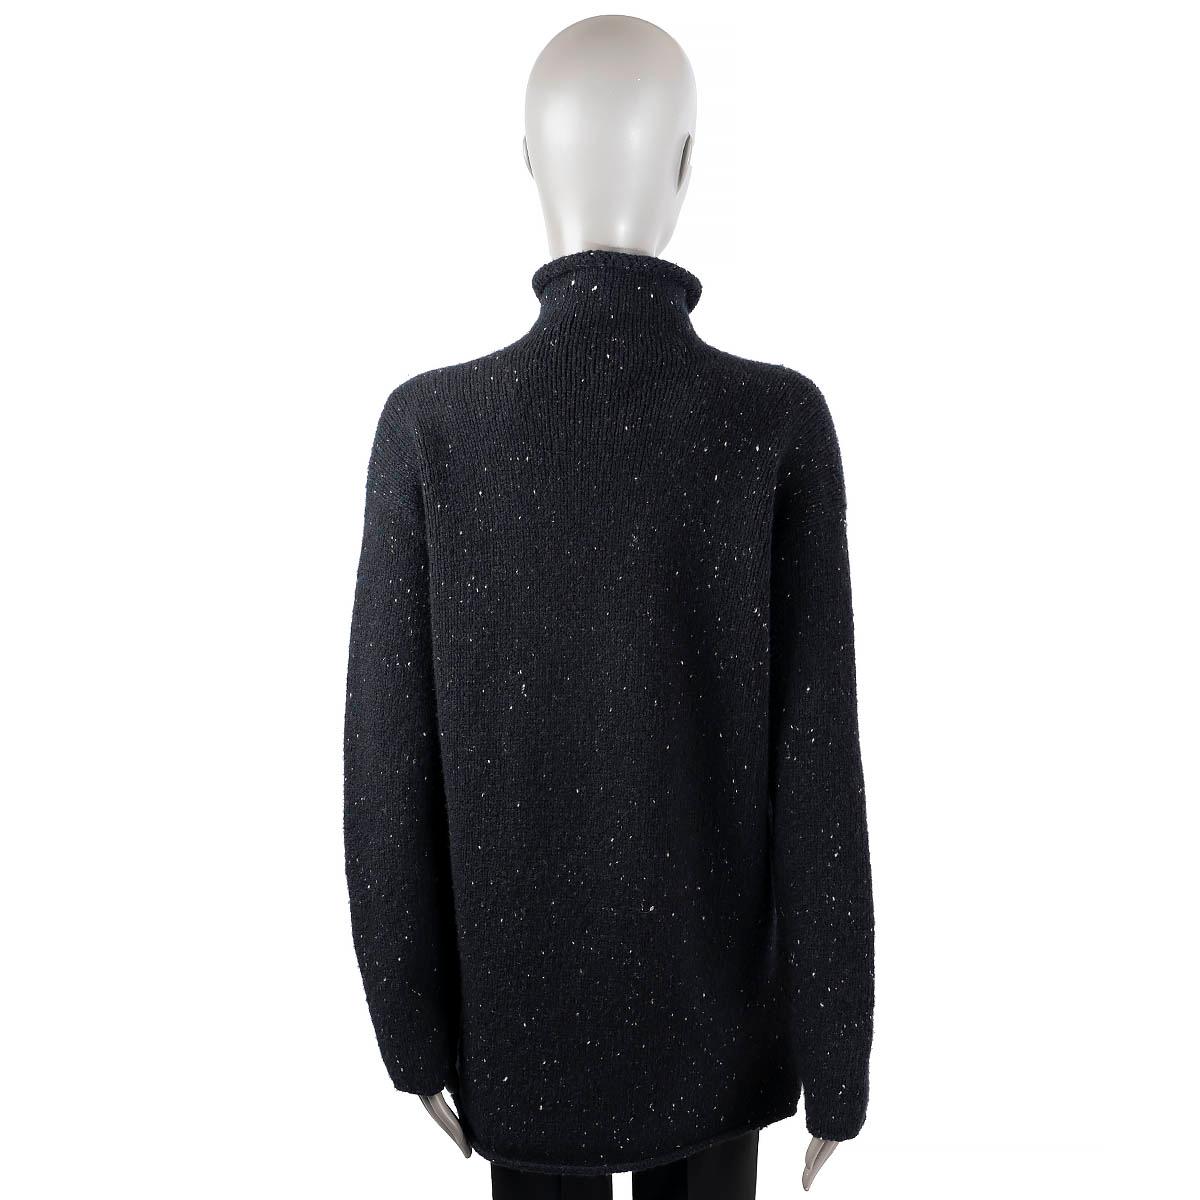 HERMES black & white cashmere SPECKLED TURTLENECK Sweater XL 1